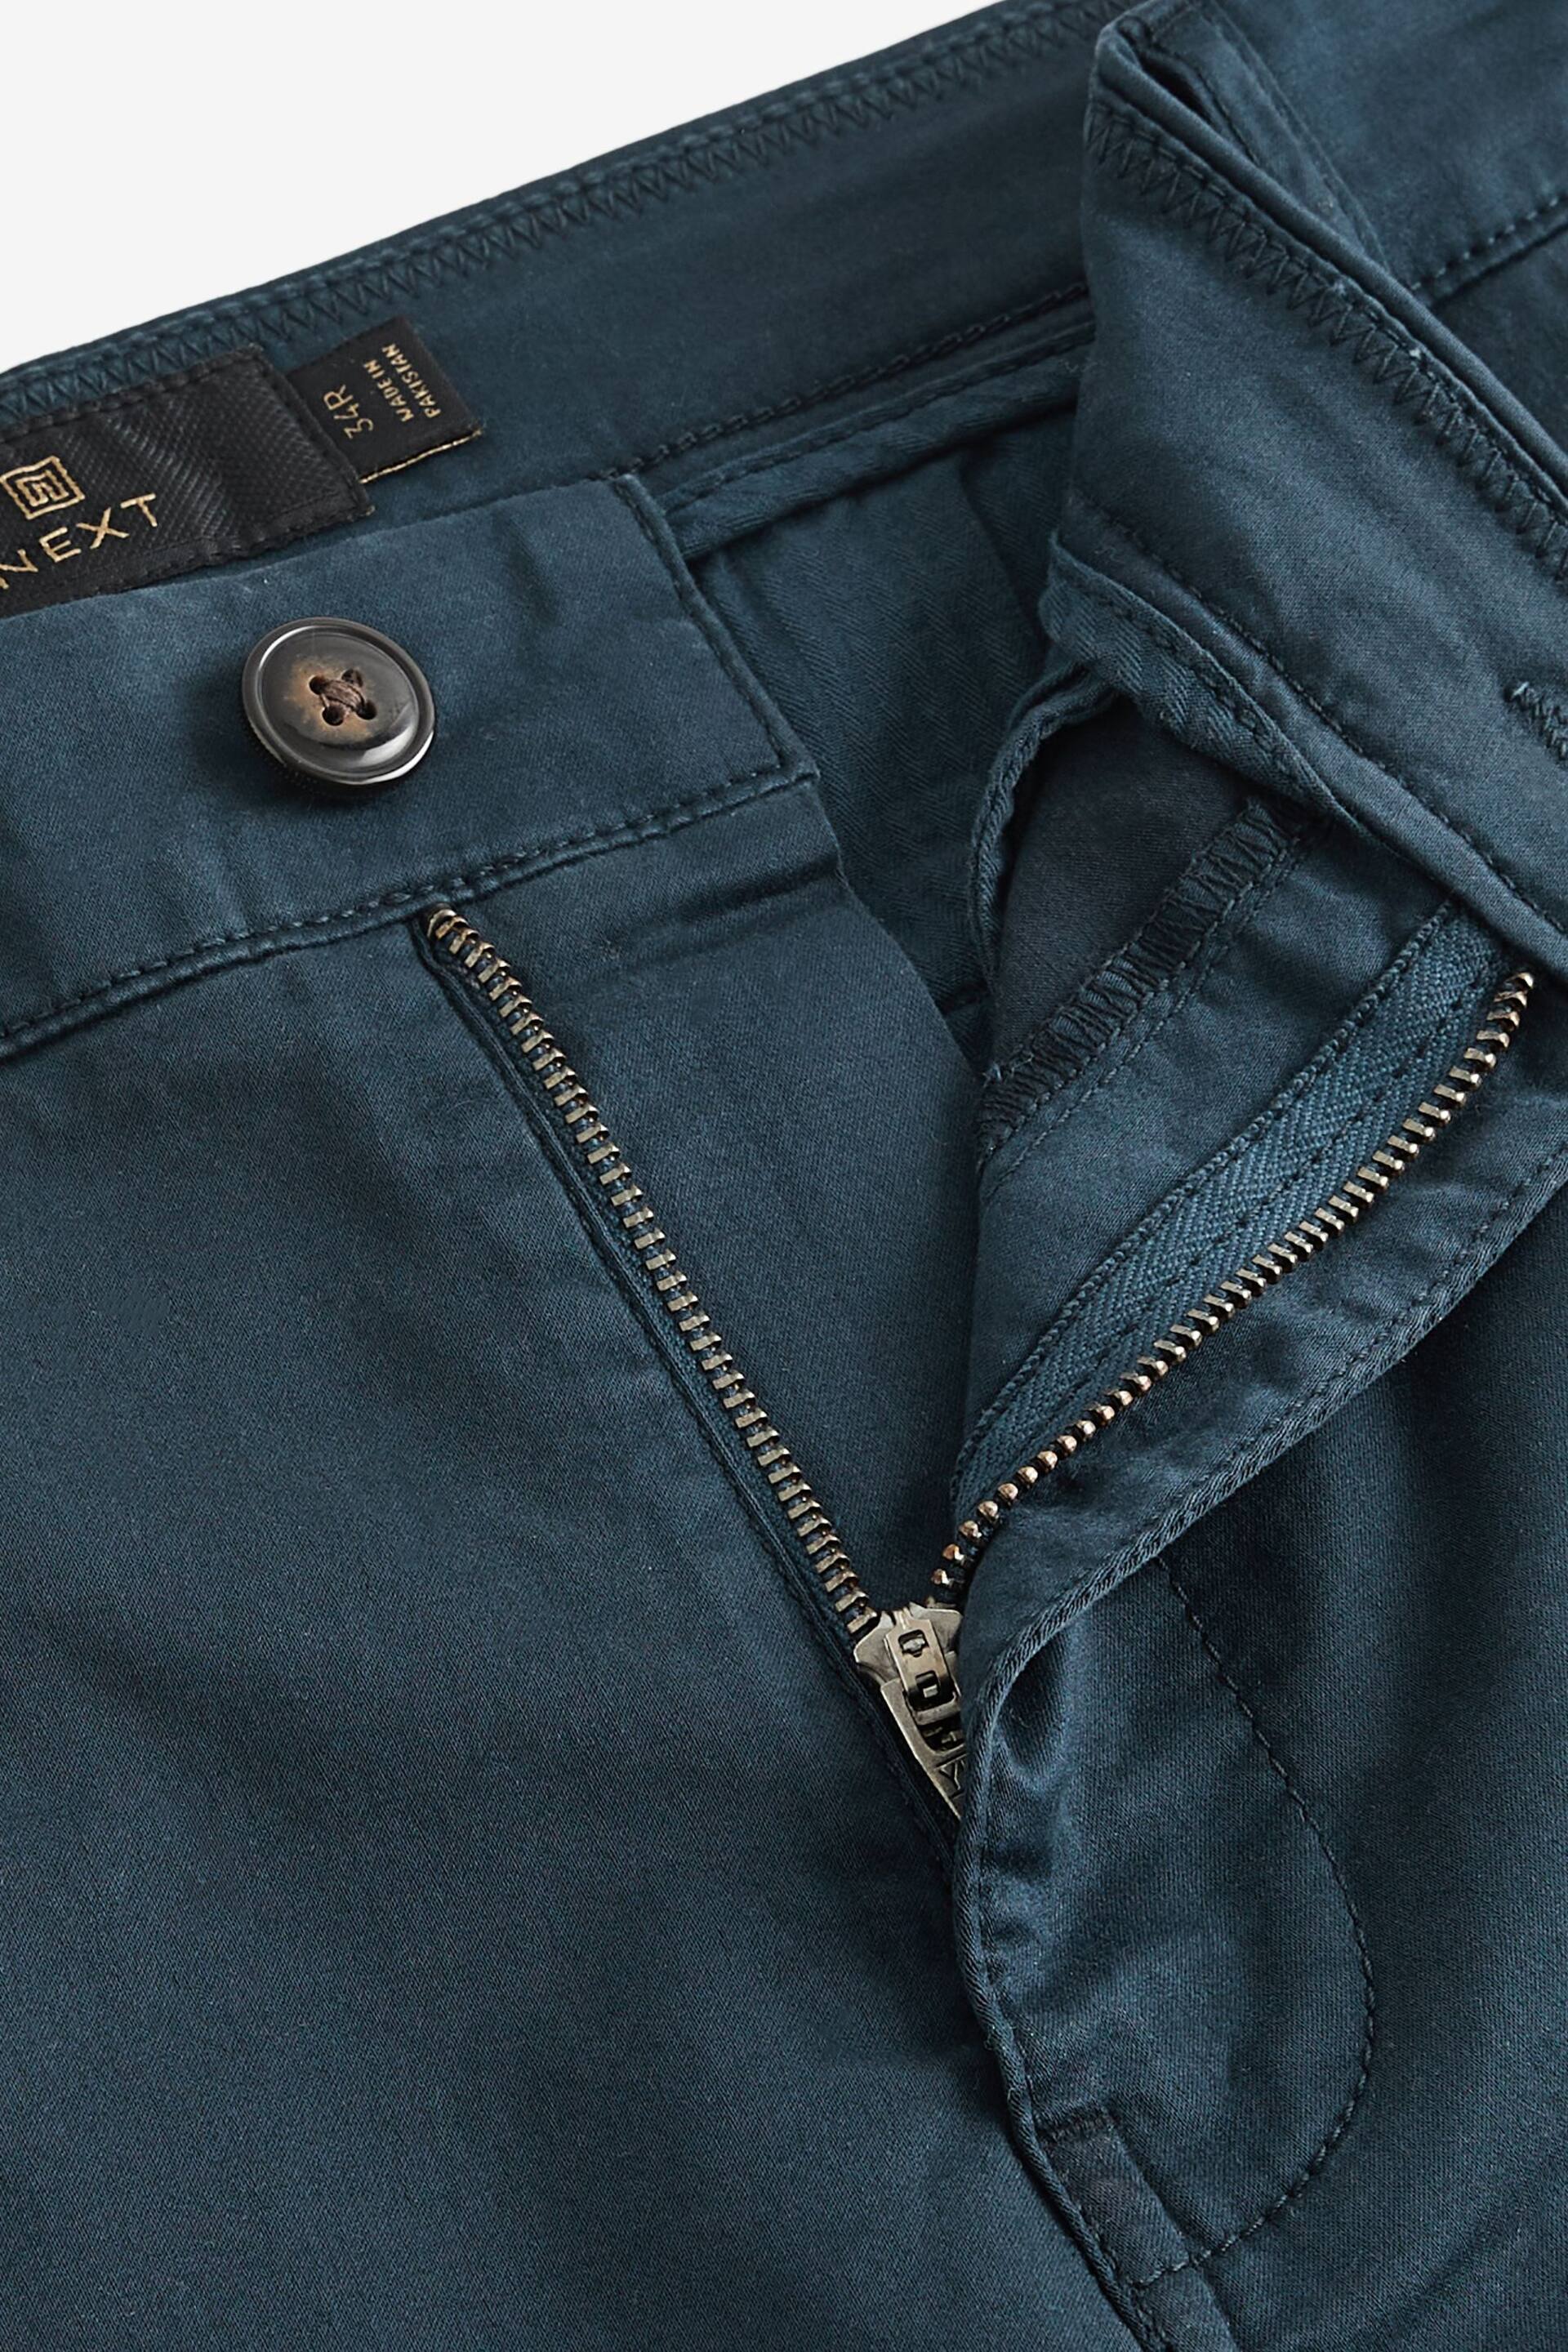 Navy Blue Slim Fit Premium Laundered Stretch Chino Shorts - Image 6 of 8